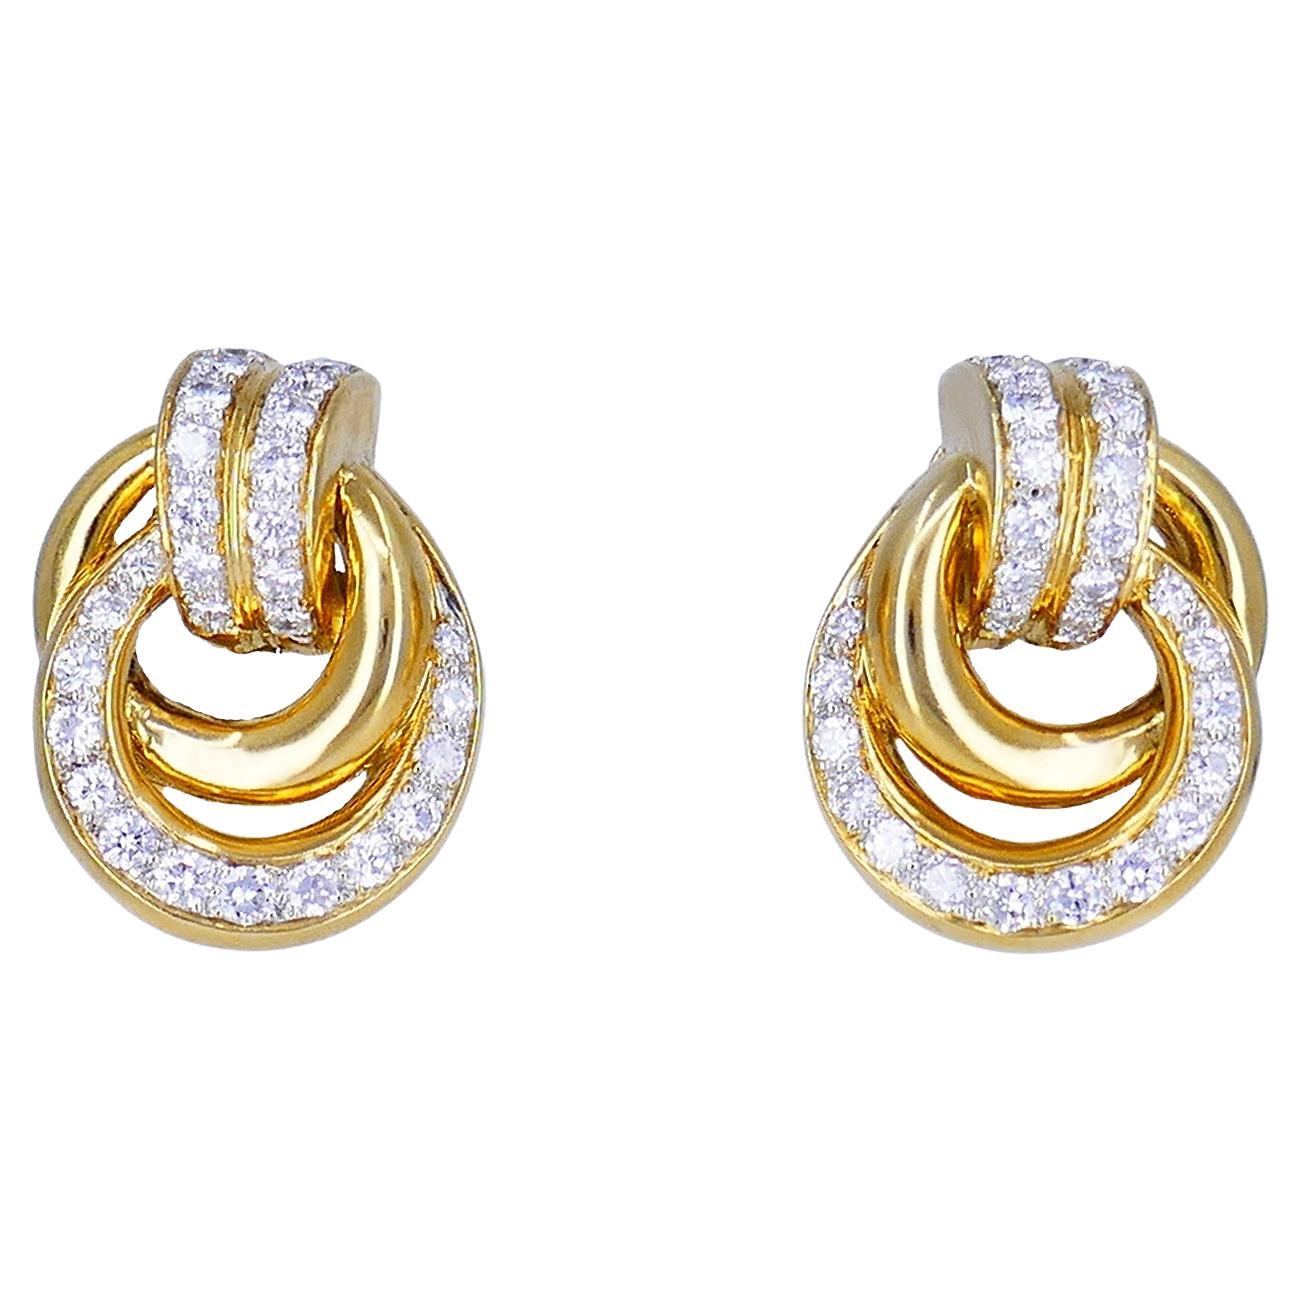 Vintage Earrings 18k Gold Diamond French Estate Jewelry